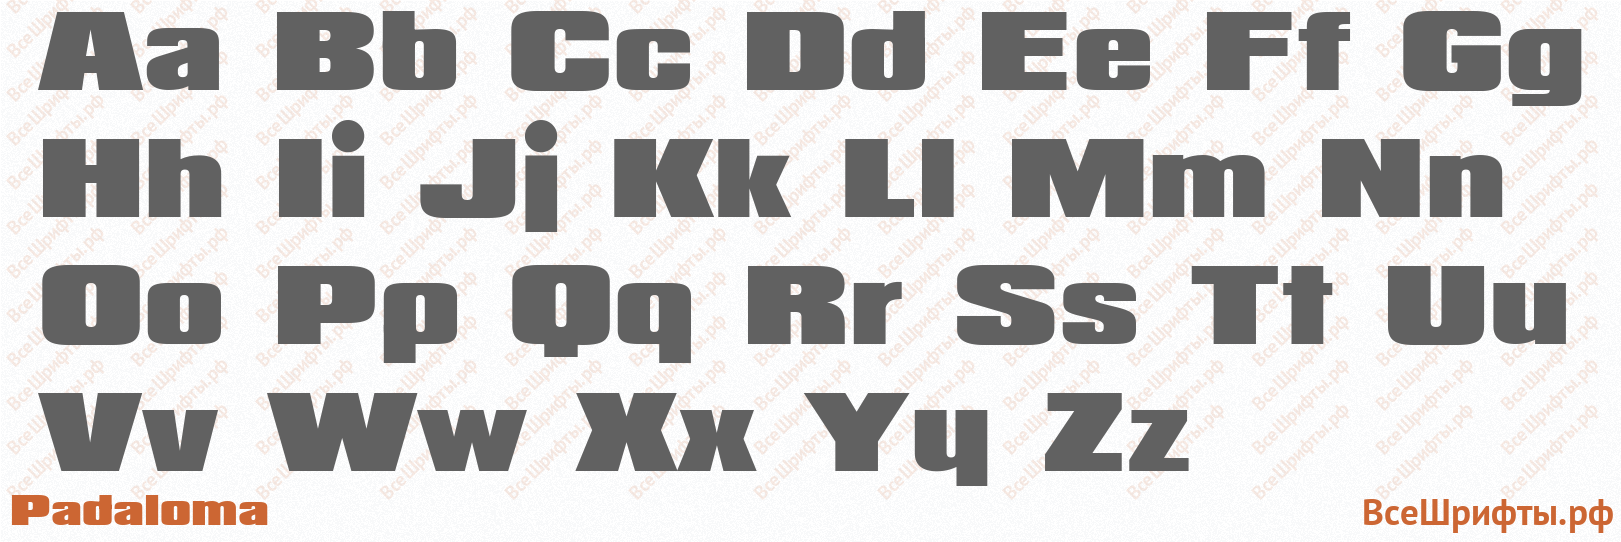 Шрифт Padaloma с латинскими буквами